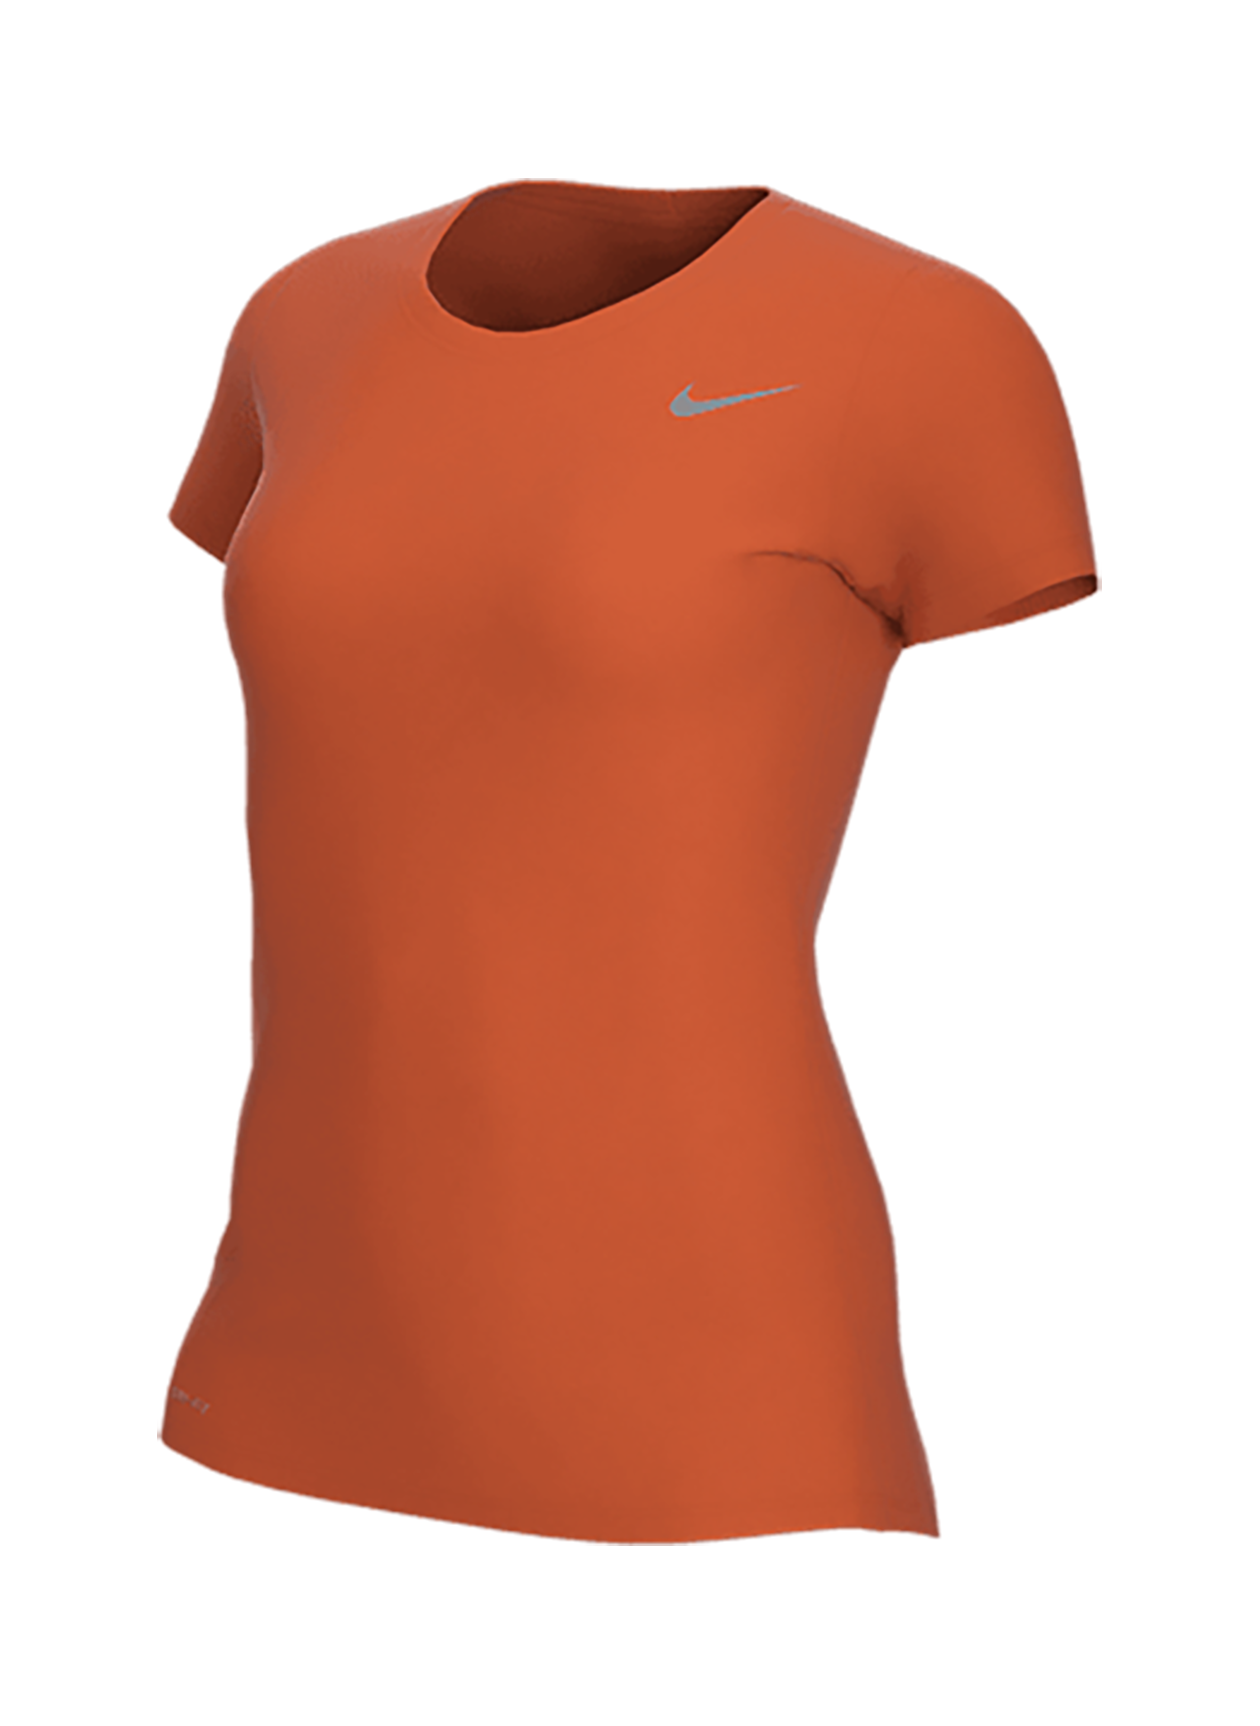 Nike Women's University Orange Legend Training T-Shirt